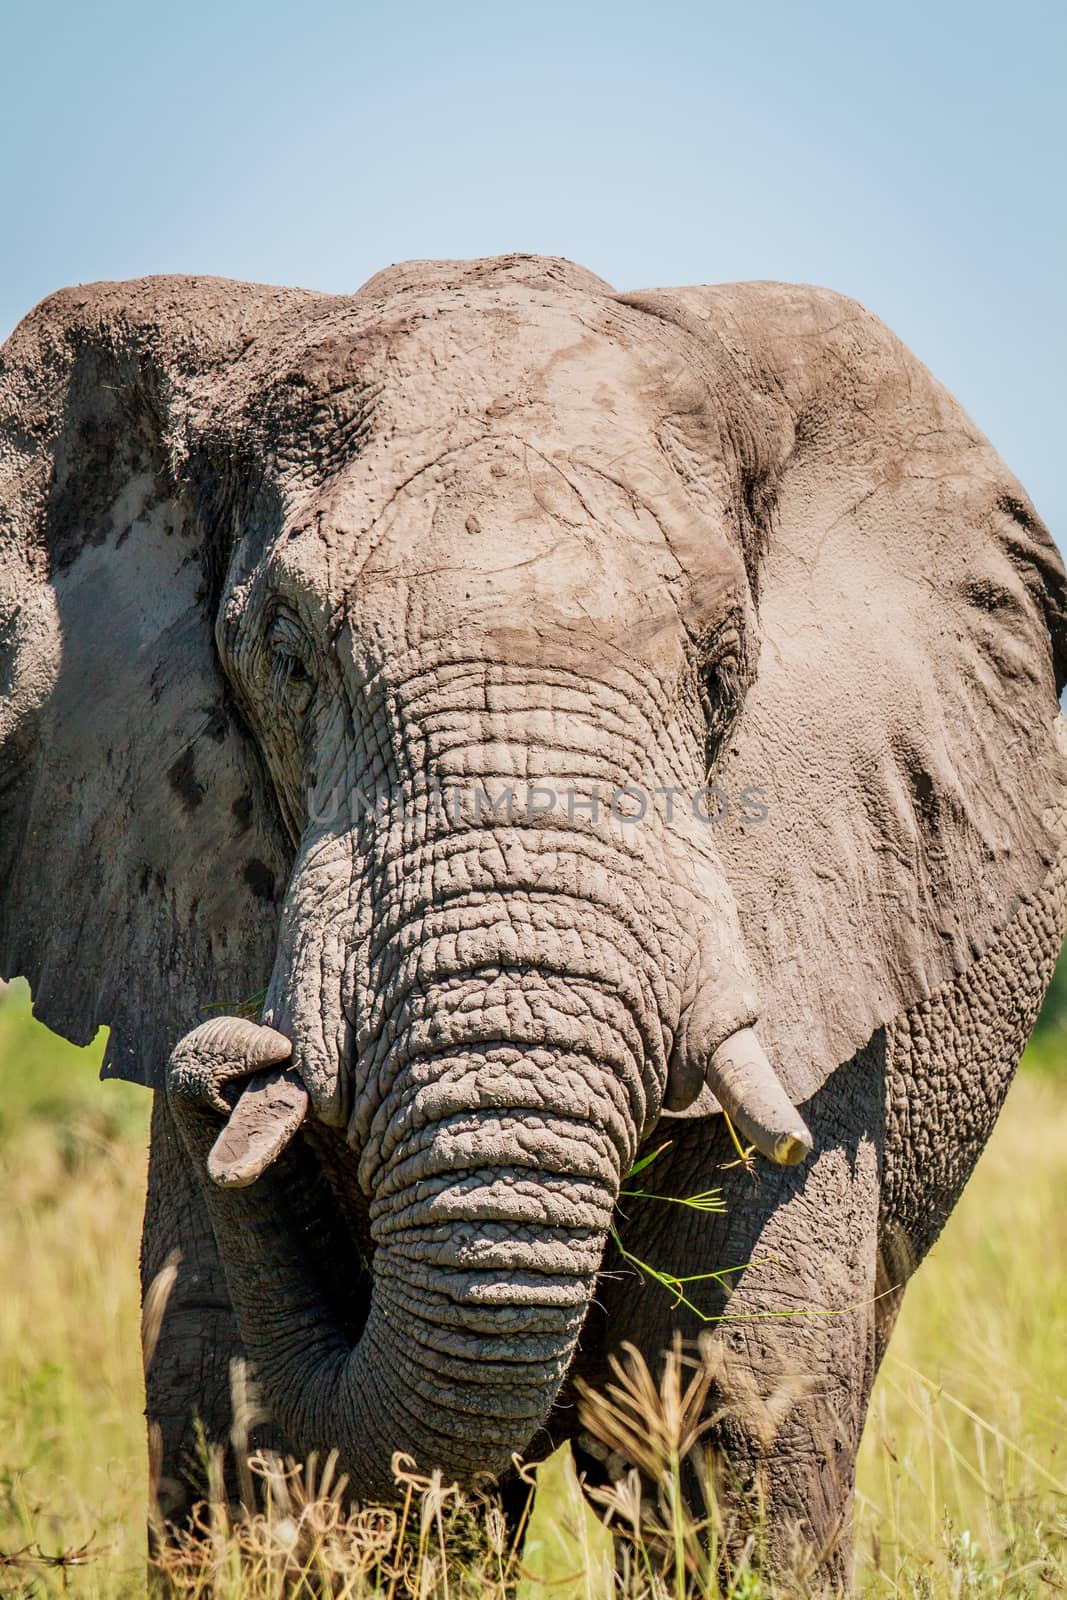 Elephant starring at the camera in the Chobe National Park, Botswana.